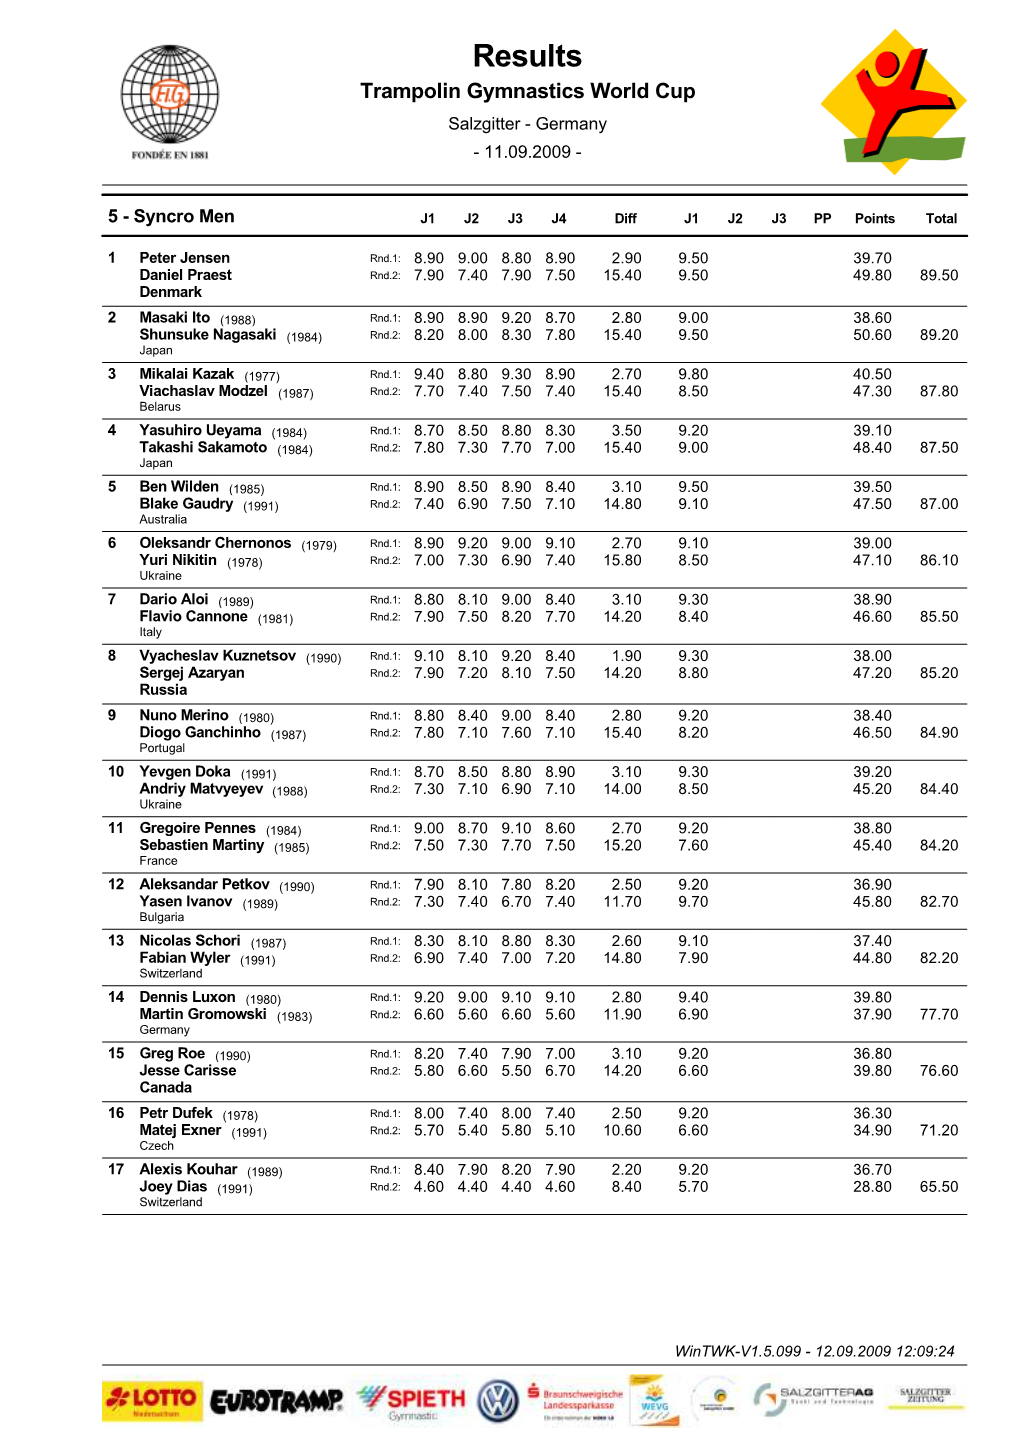 Results Trampolin Gymnastics World Cup Salzgitter - Germany - 11.09.2009